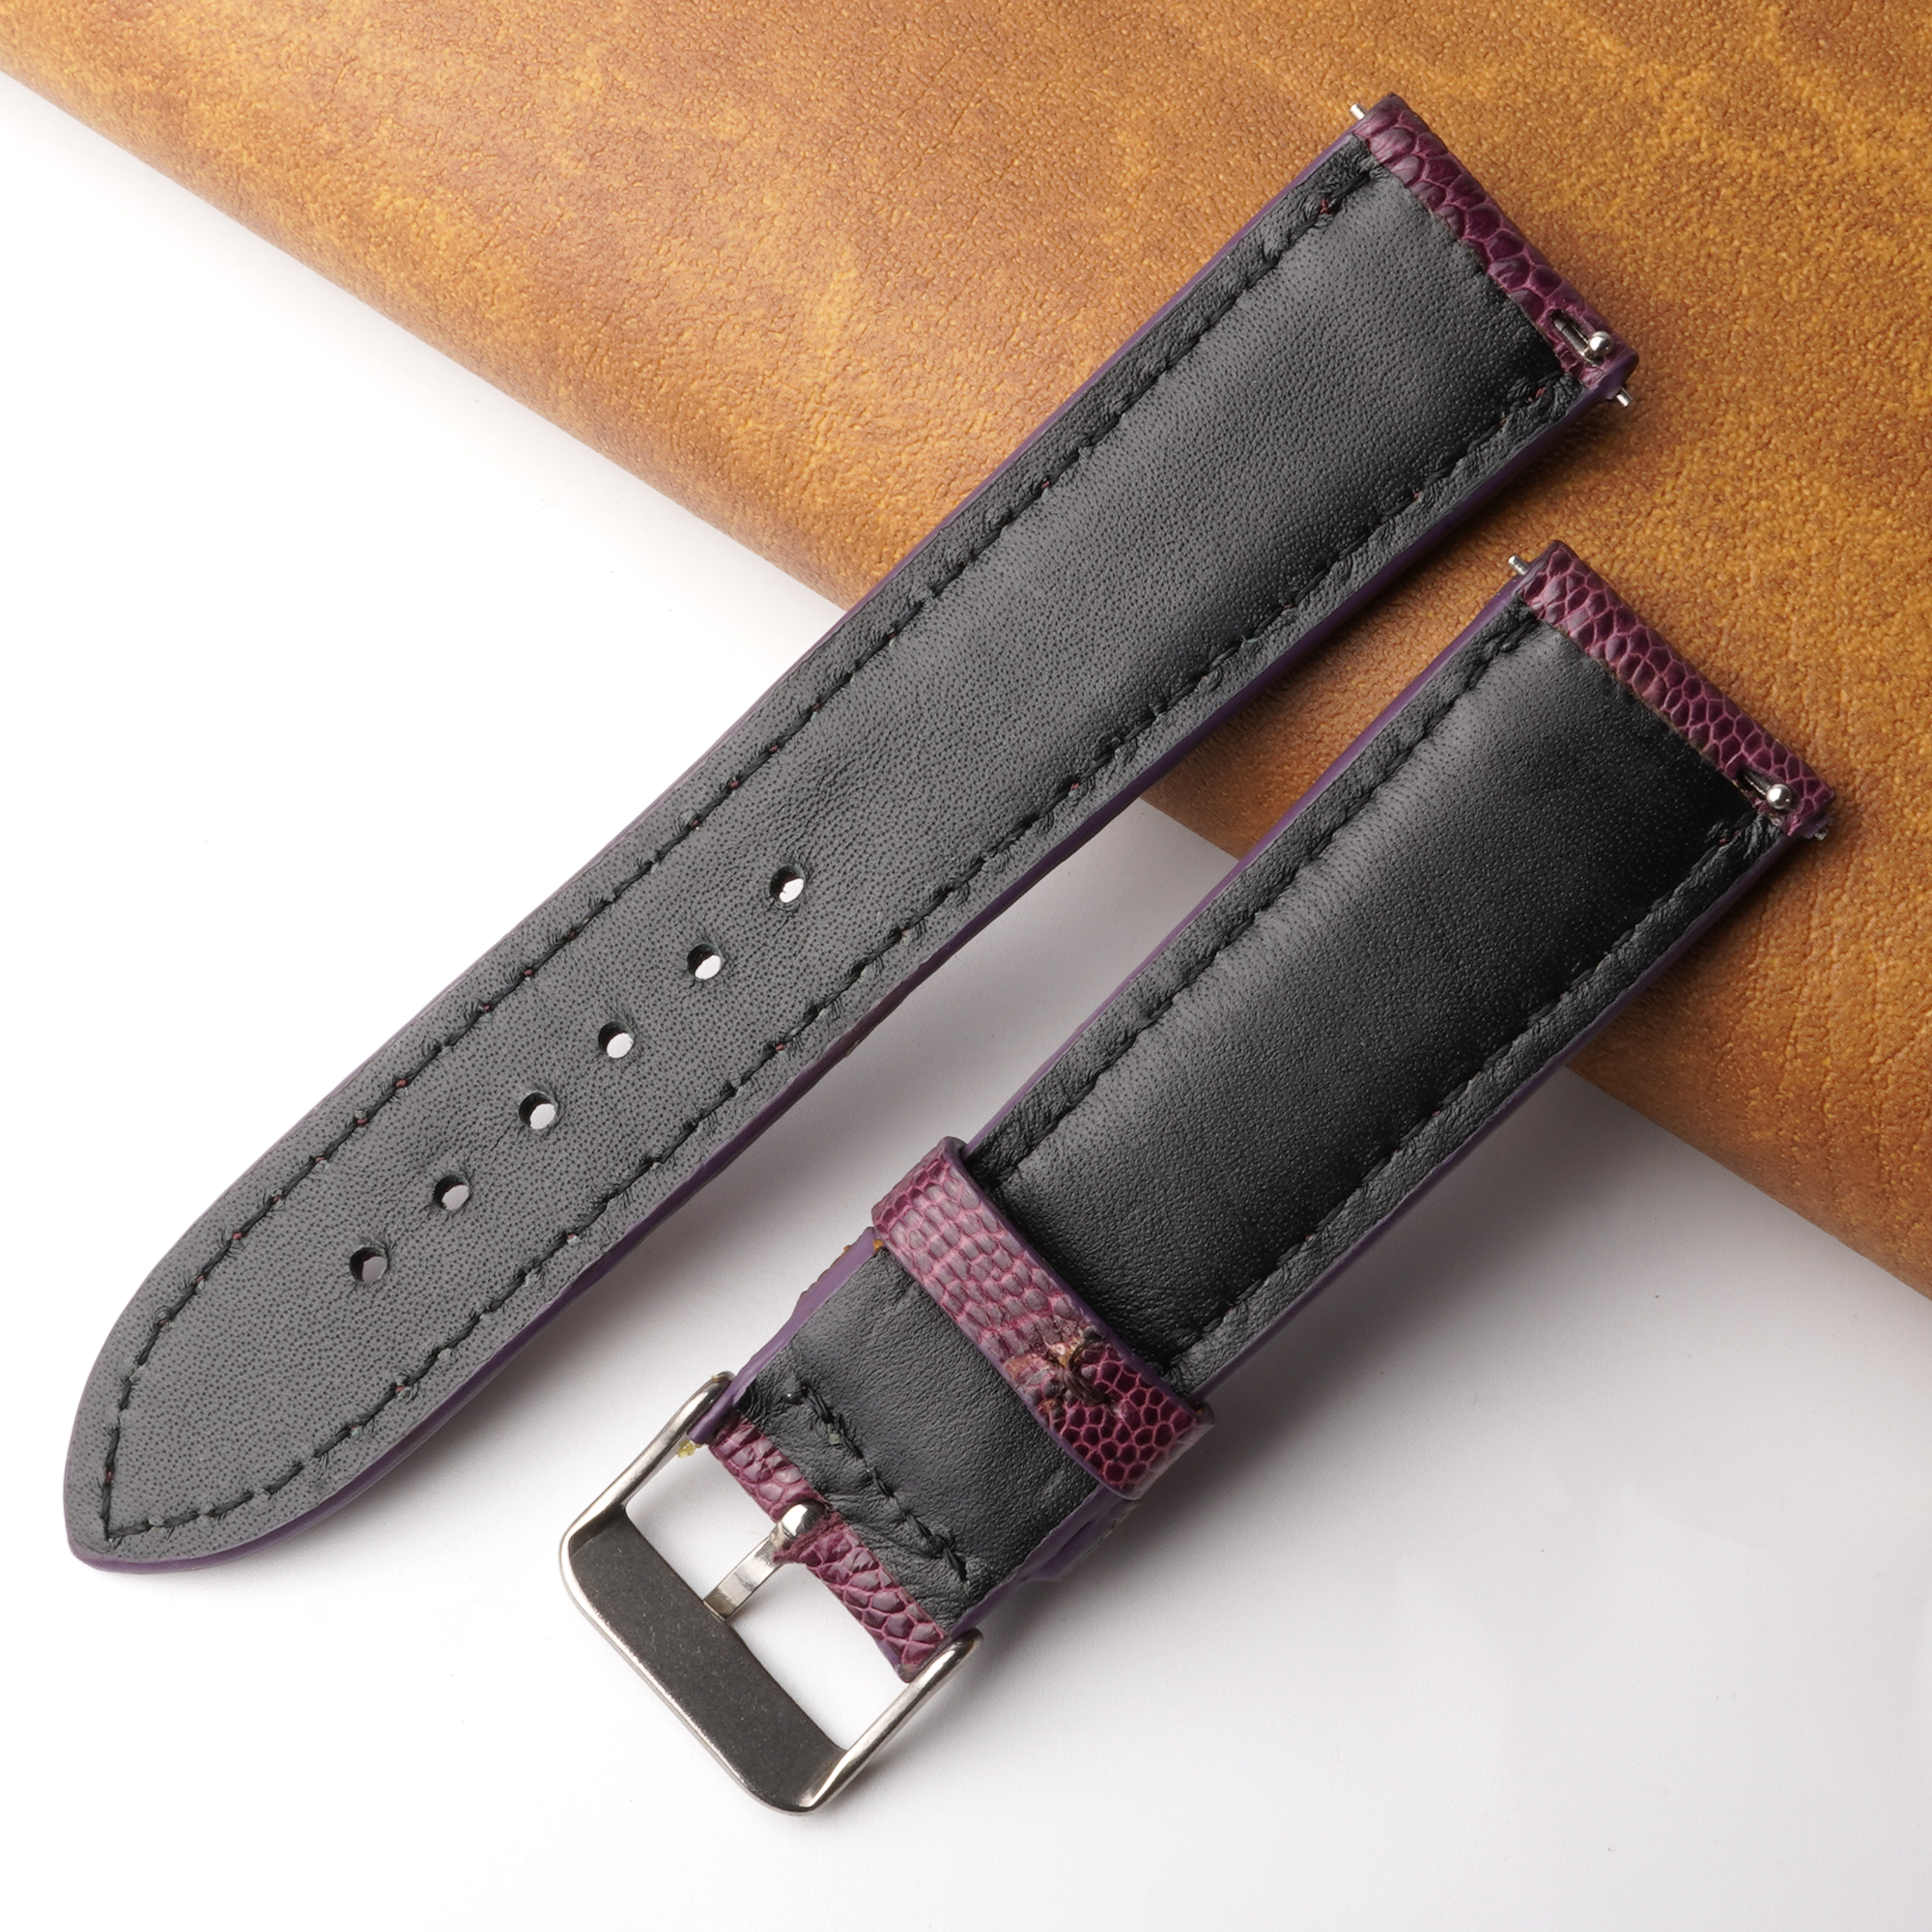 22mm Purple Unique Ostrich Leather Watch Band For Men | DH-170K